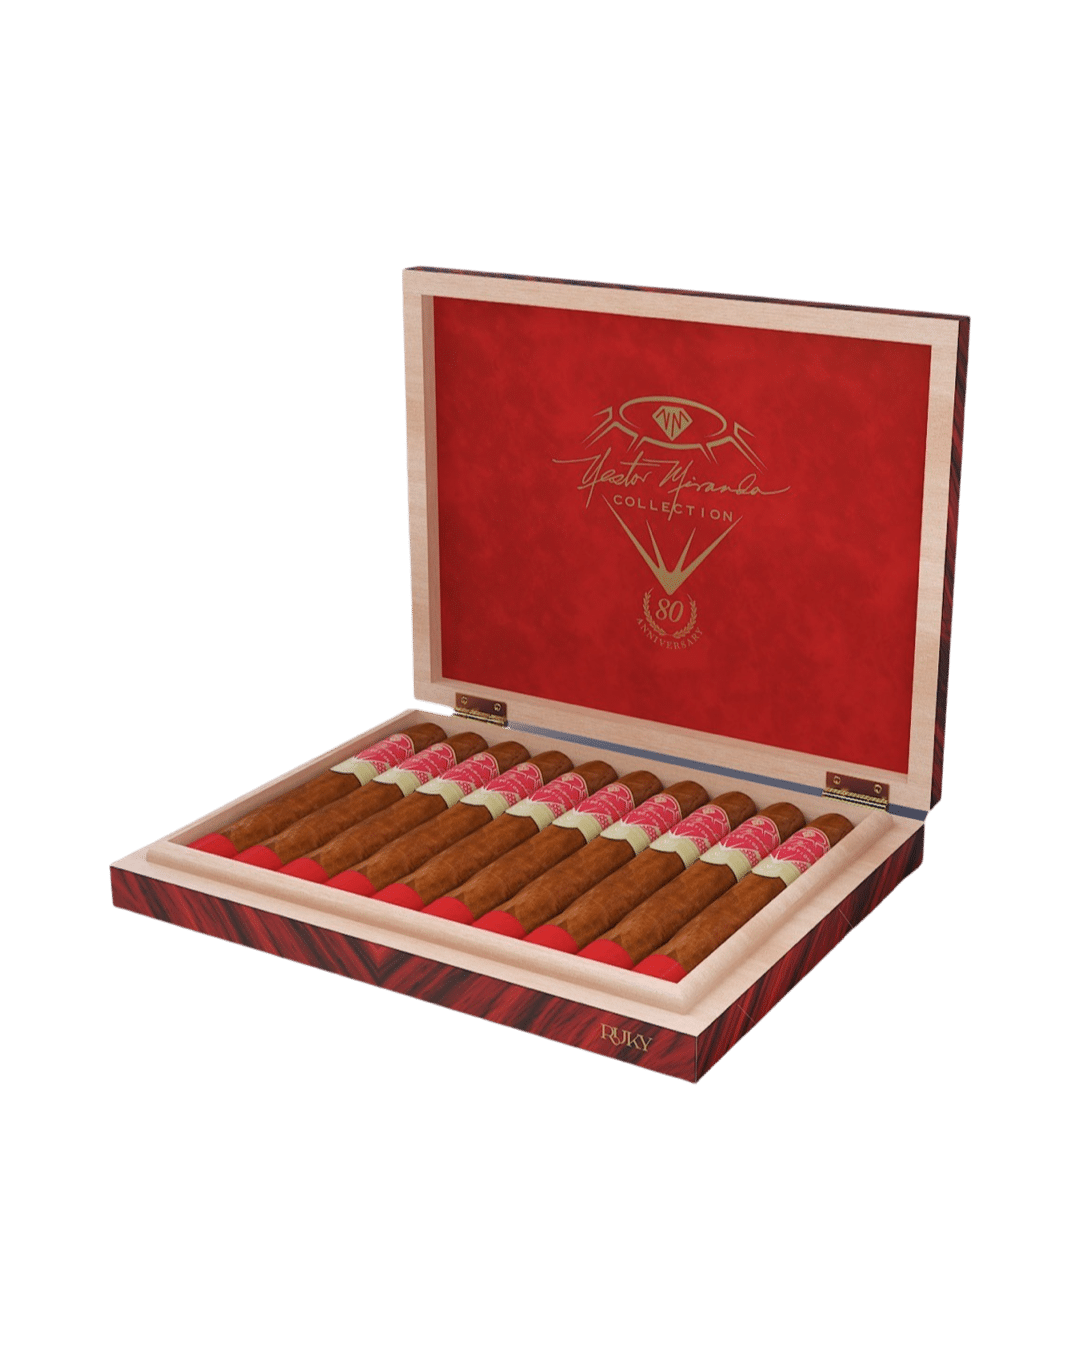 Miami Cigar & Co. Announces NM80 to Celebrate Nestor Miranda’s 80th Birthday - Cigar News